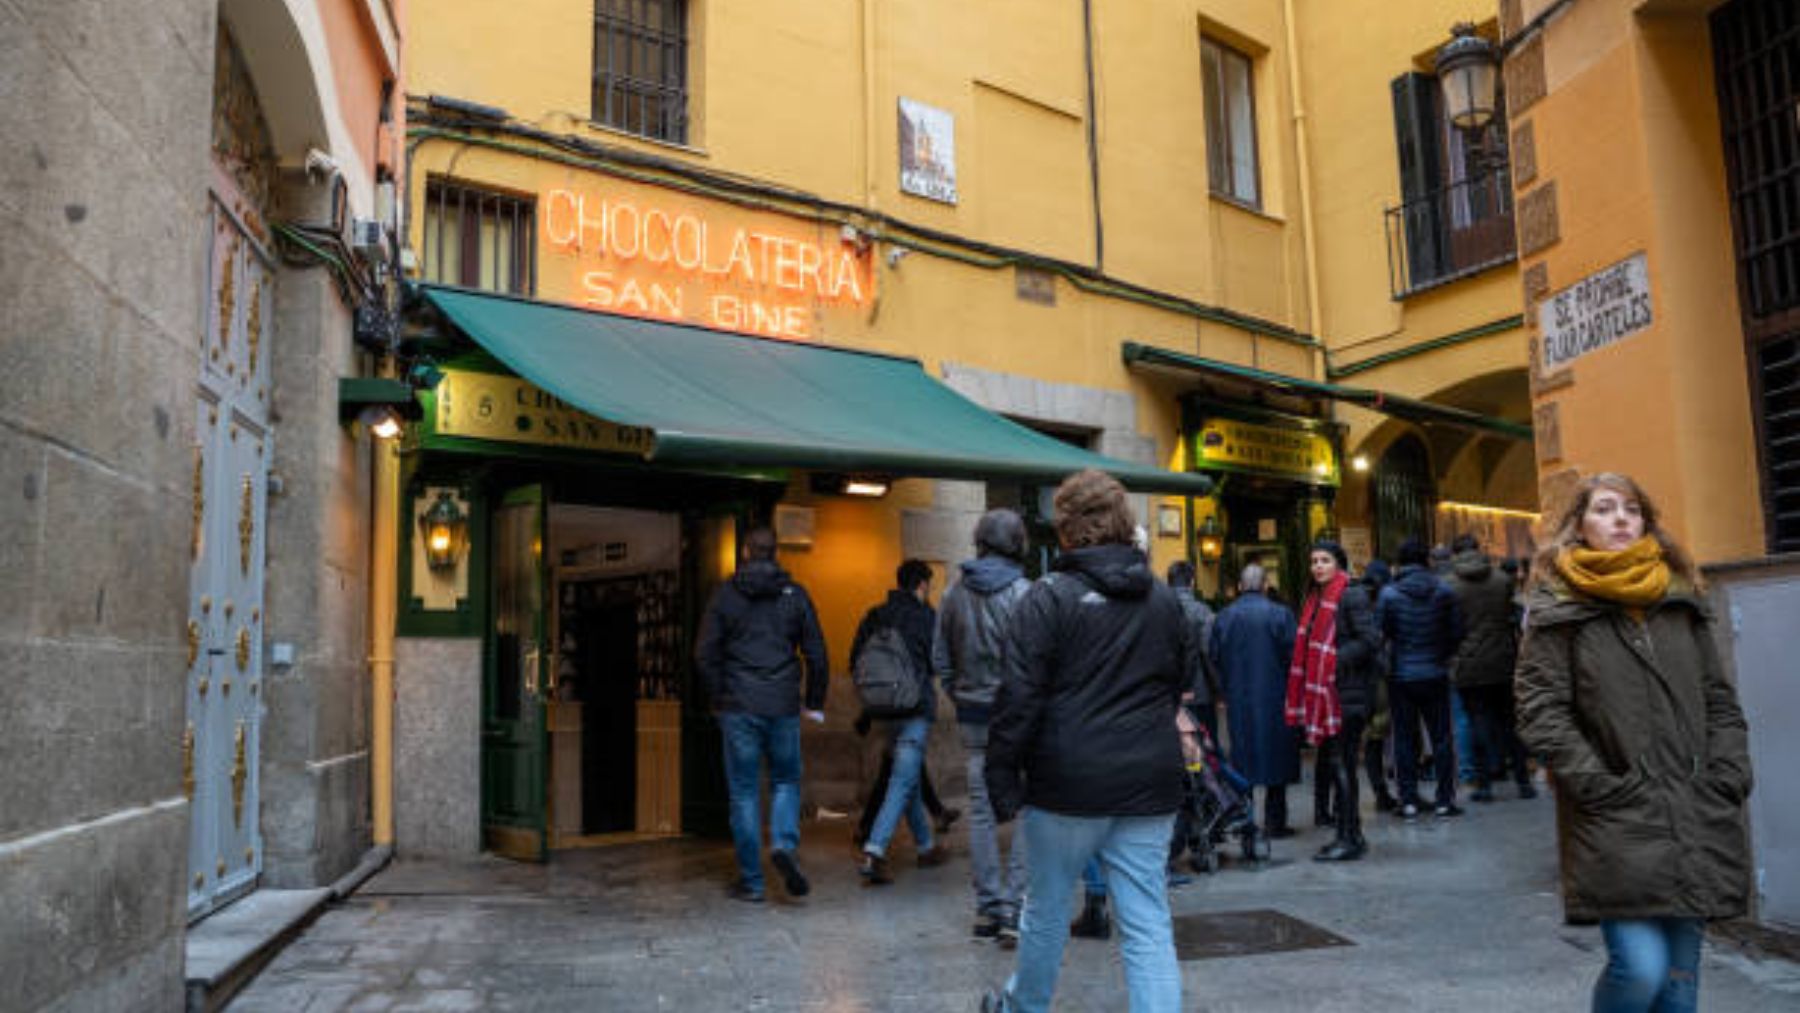 Descubre los sitios imprescindibles para comer buenos churros en Madrid